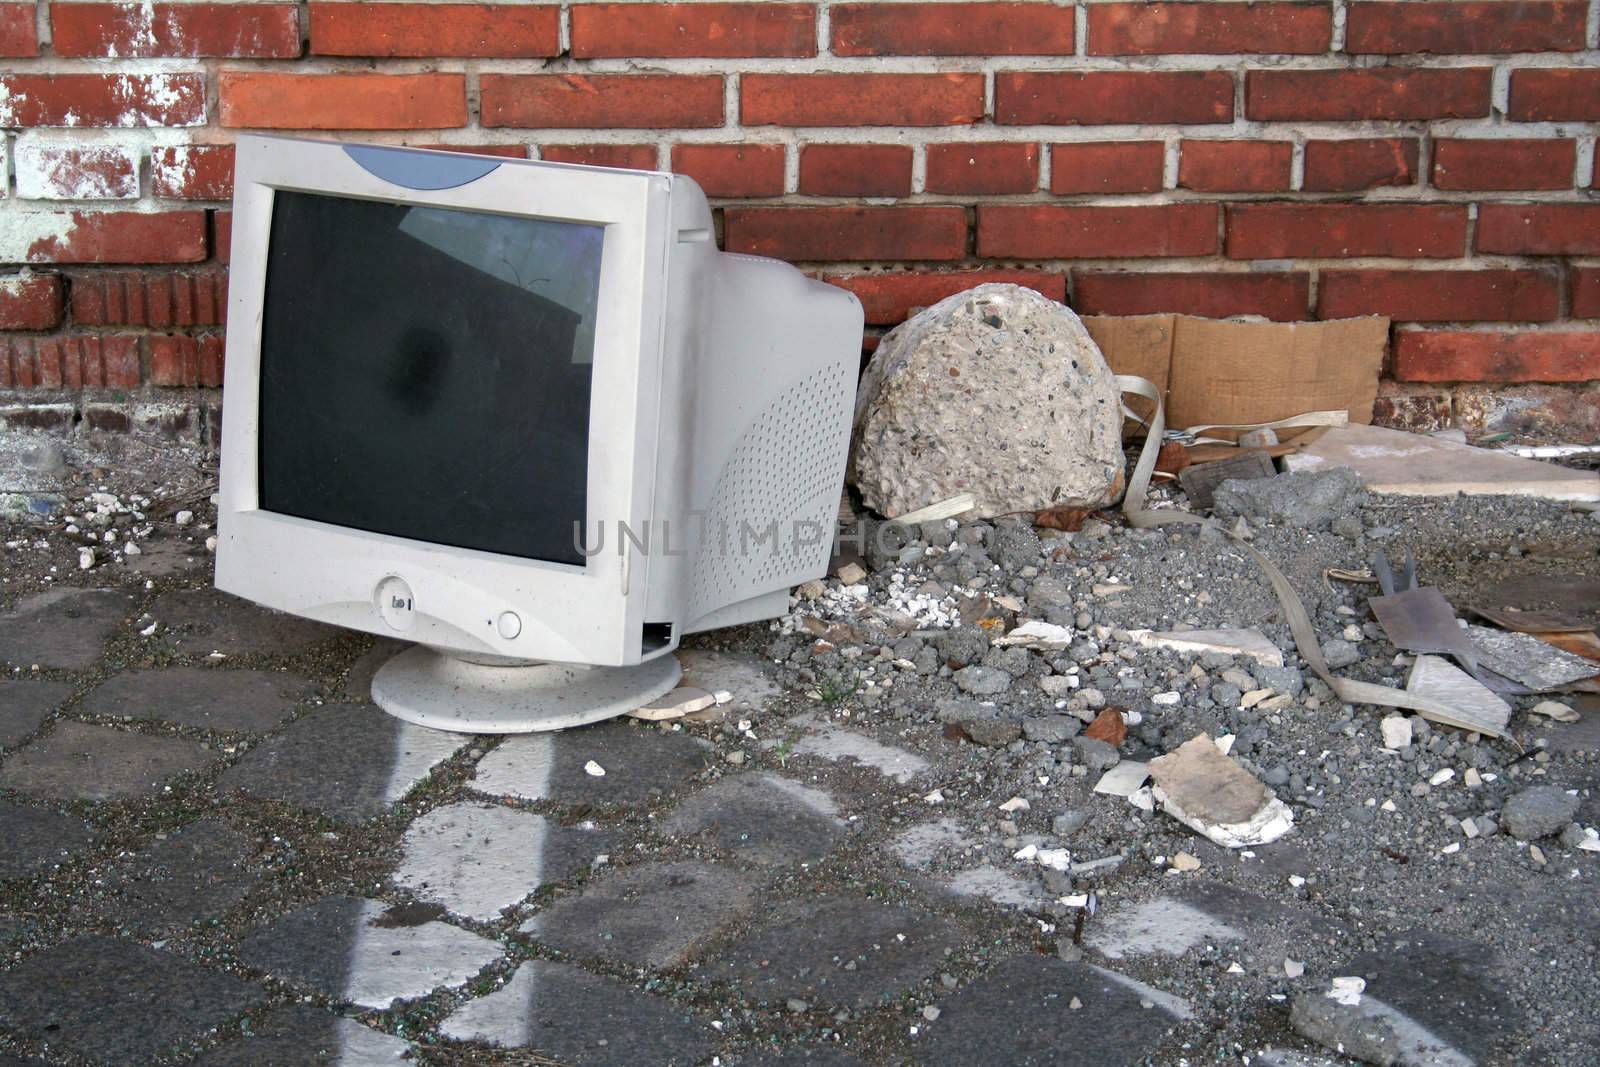 Broken CRT monitor dumped in an abandoned industrial backyard. March 2007.